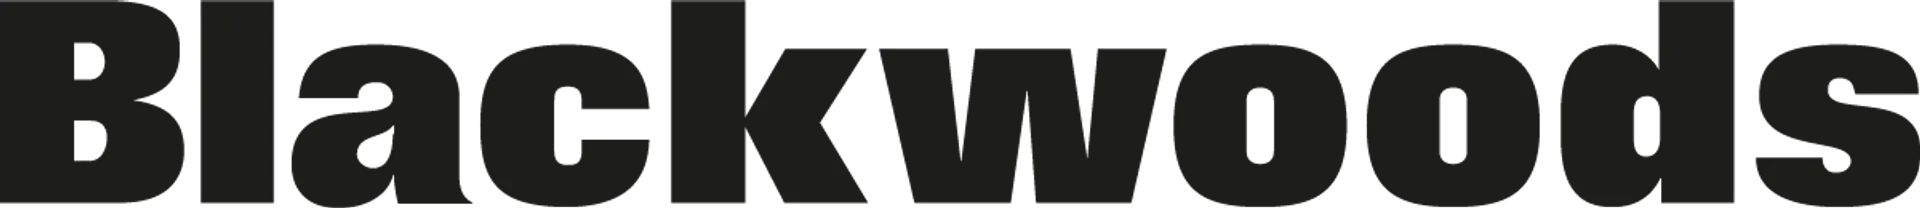 BLACKWOODS logo of current catalogue